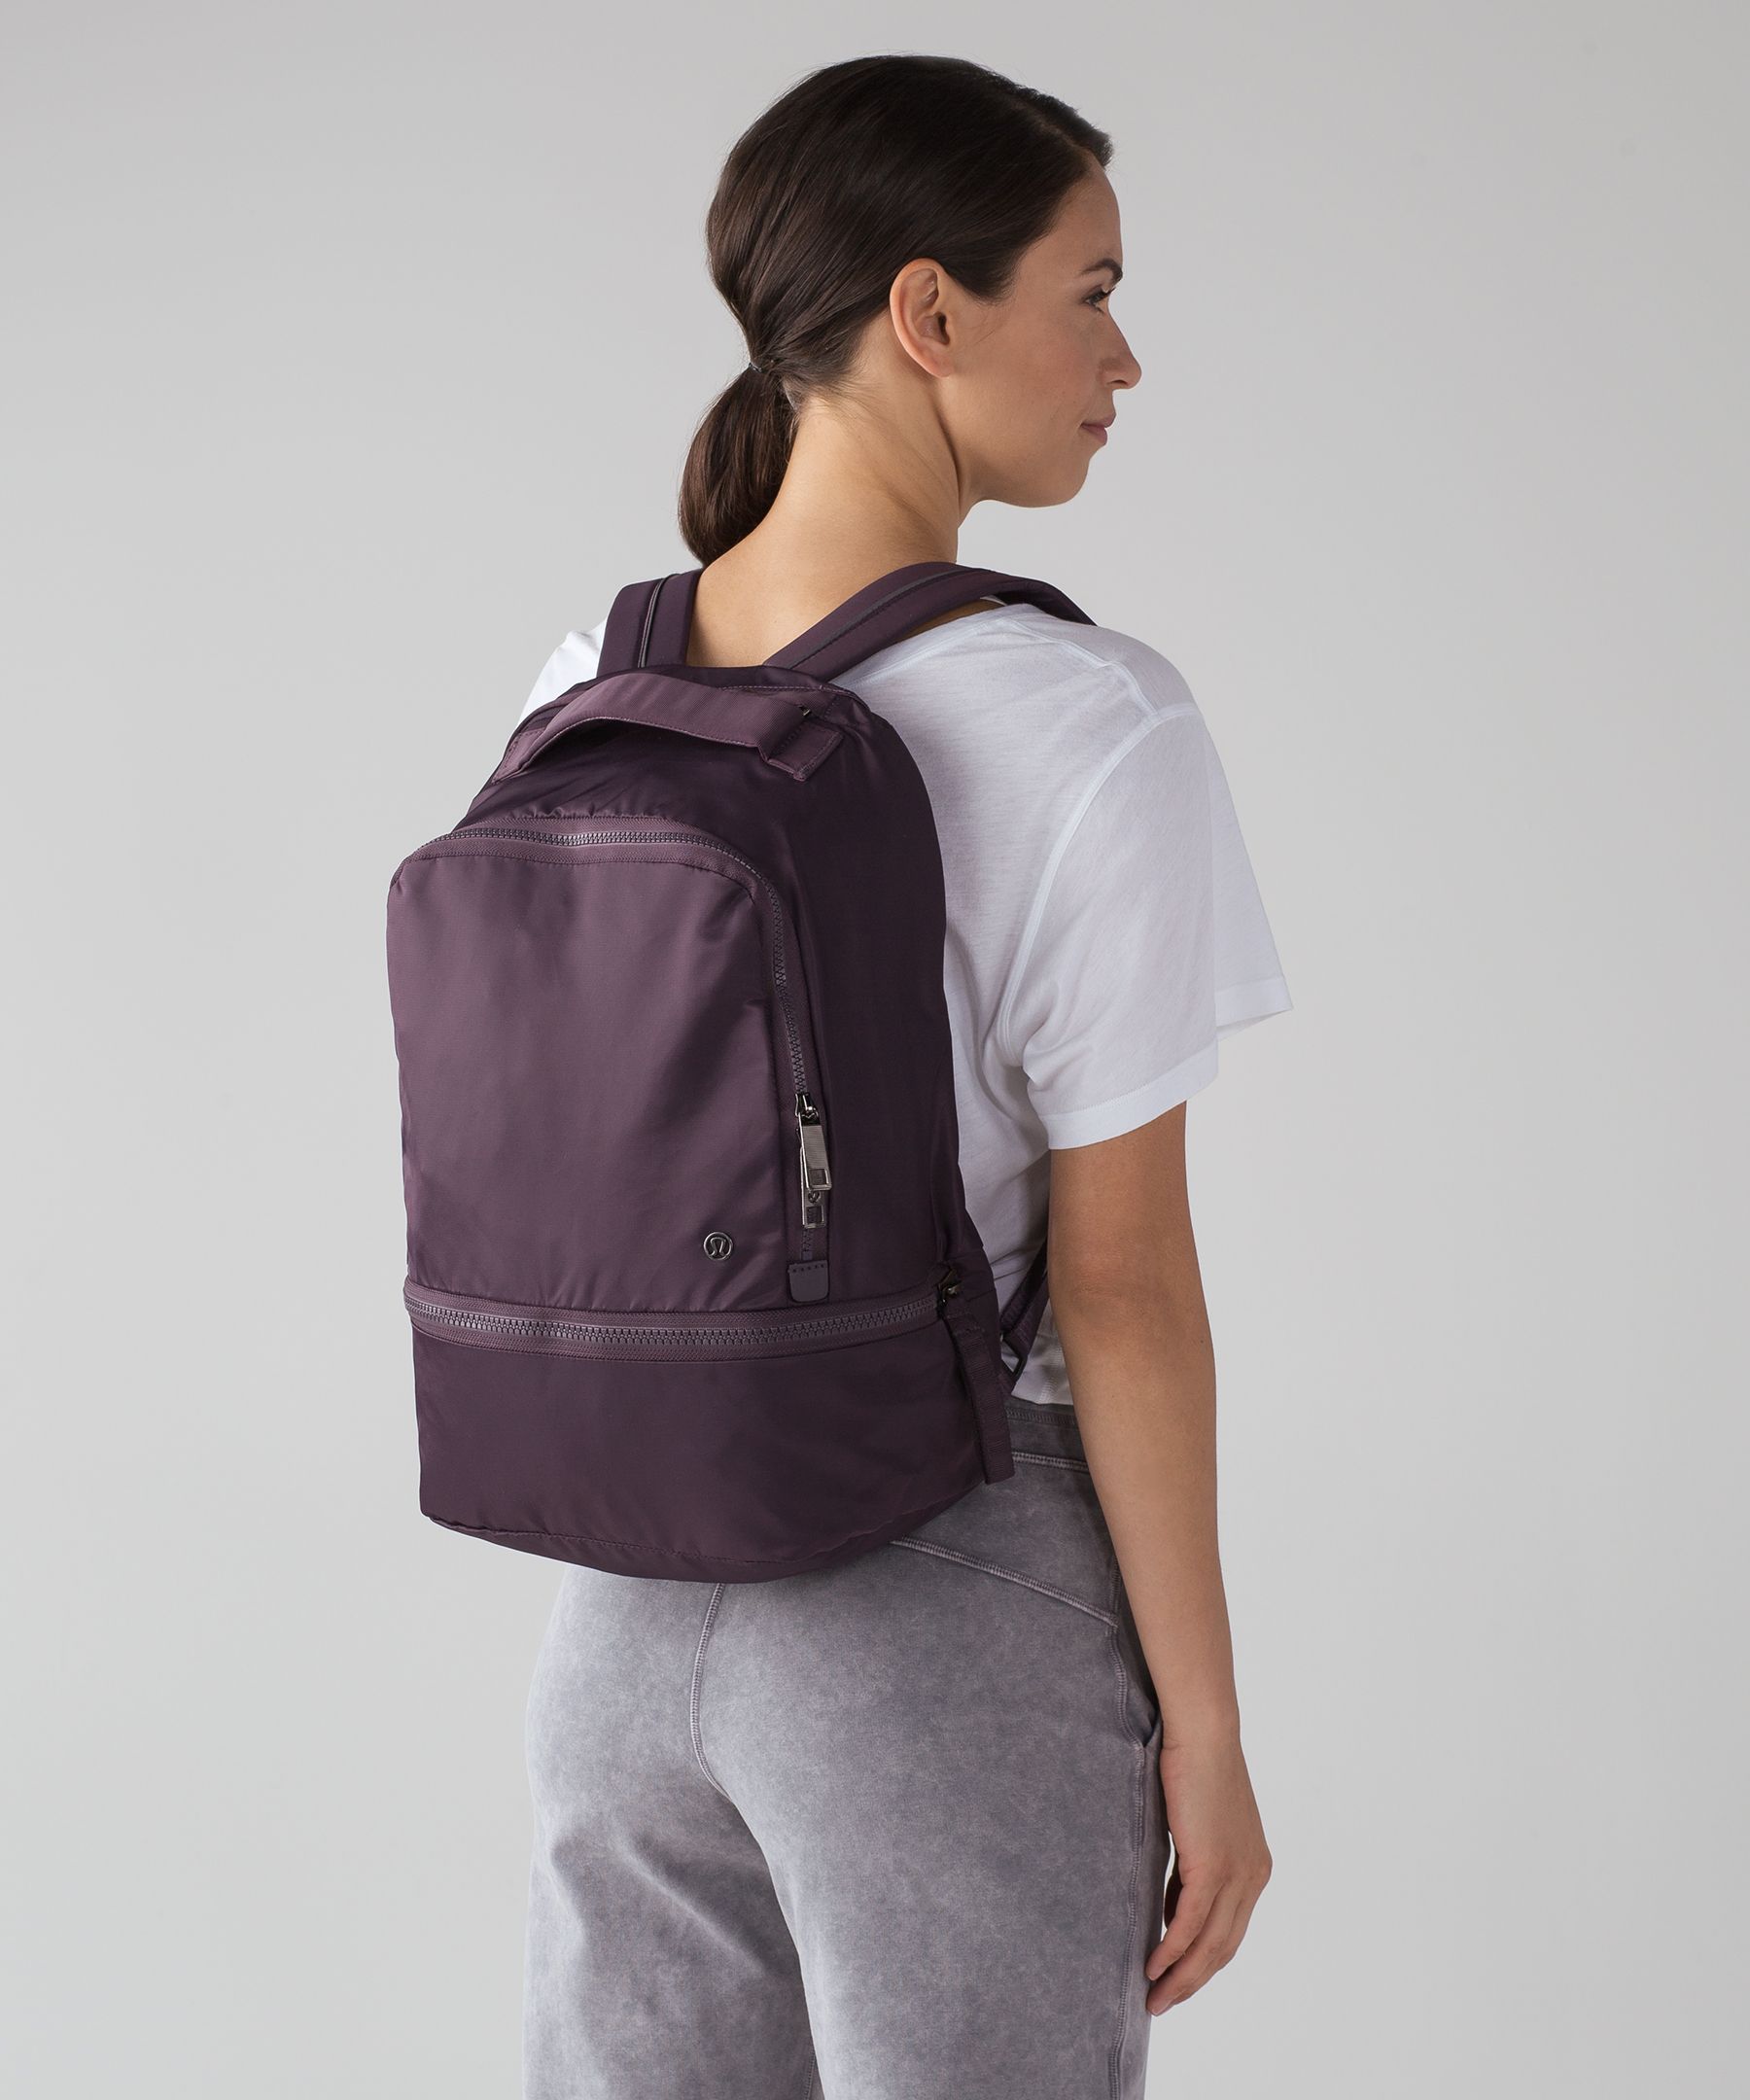 lululemon adventurer backpack